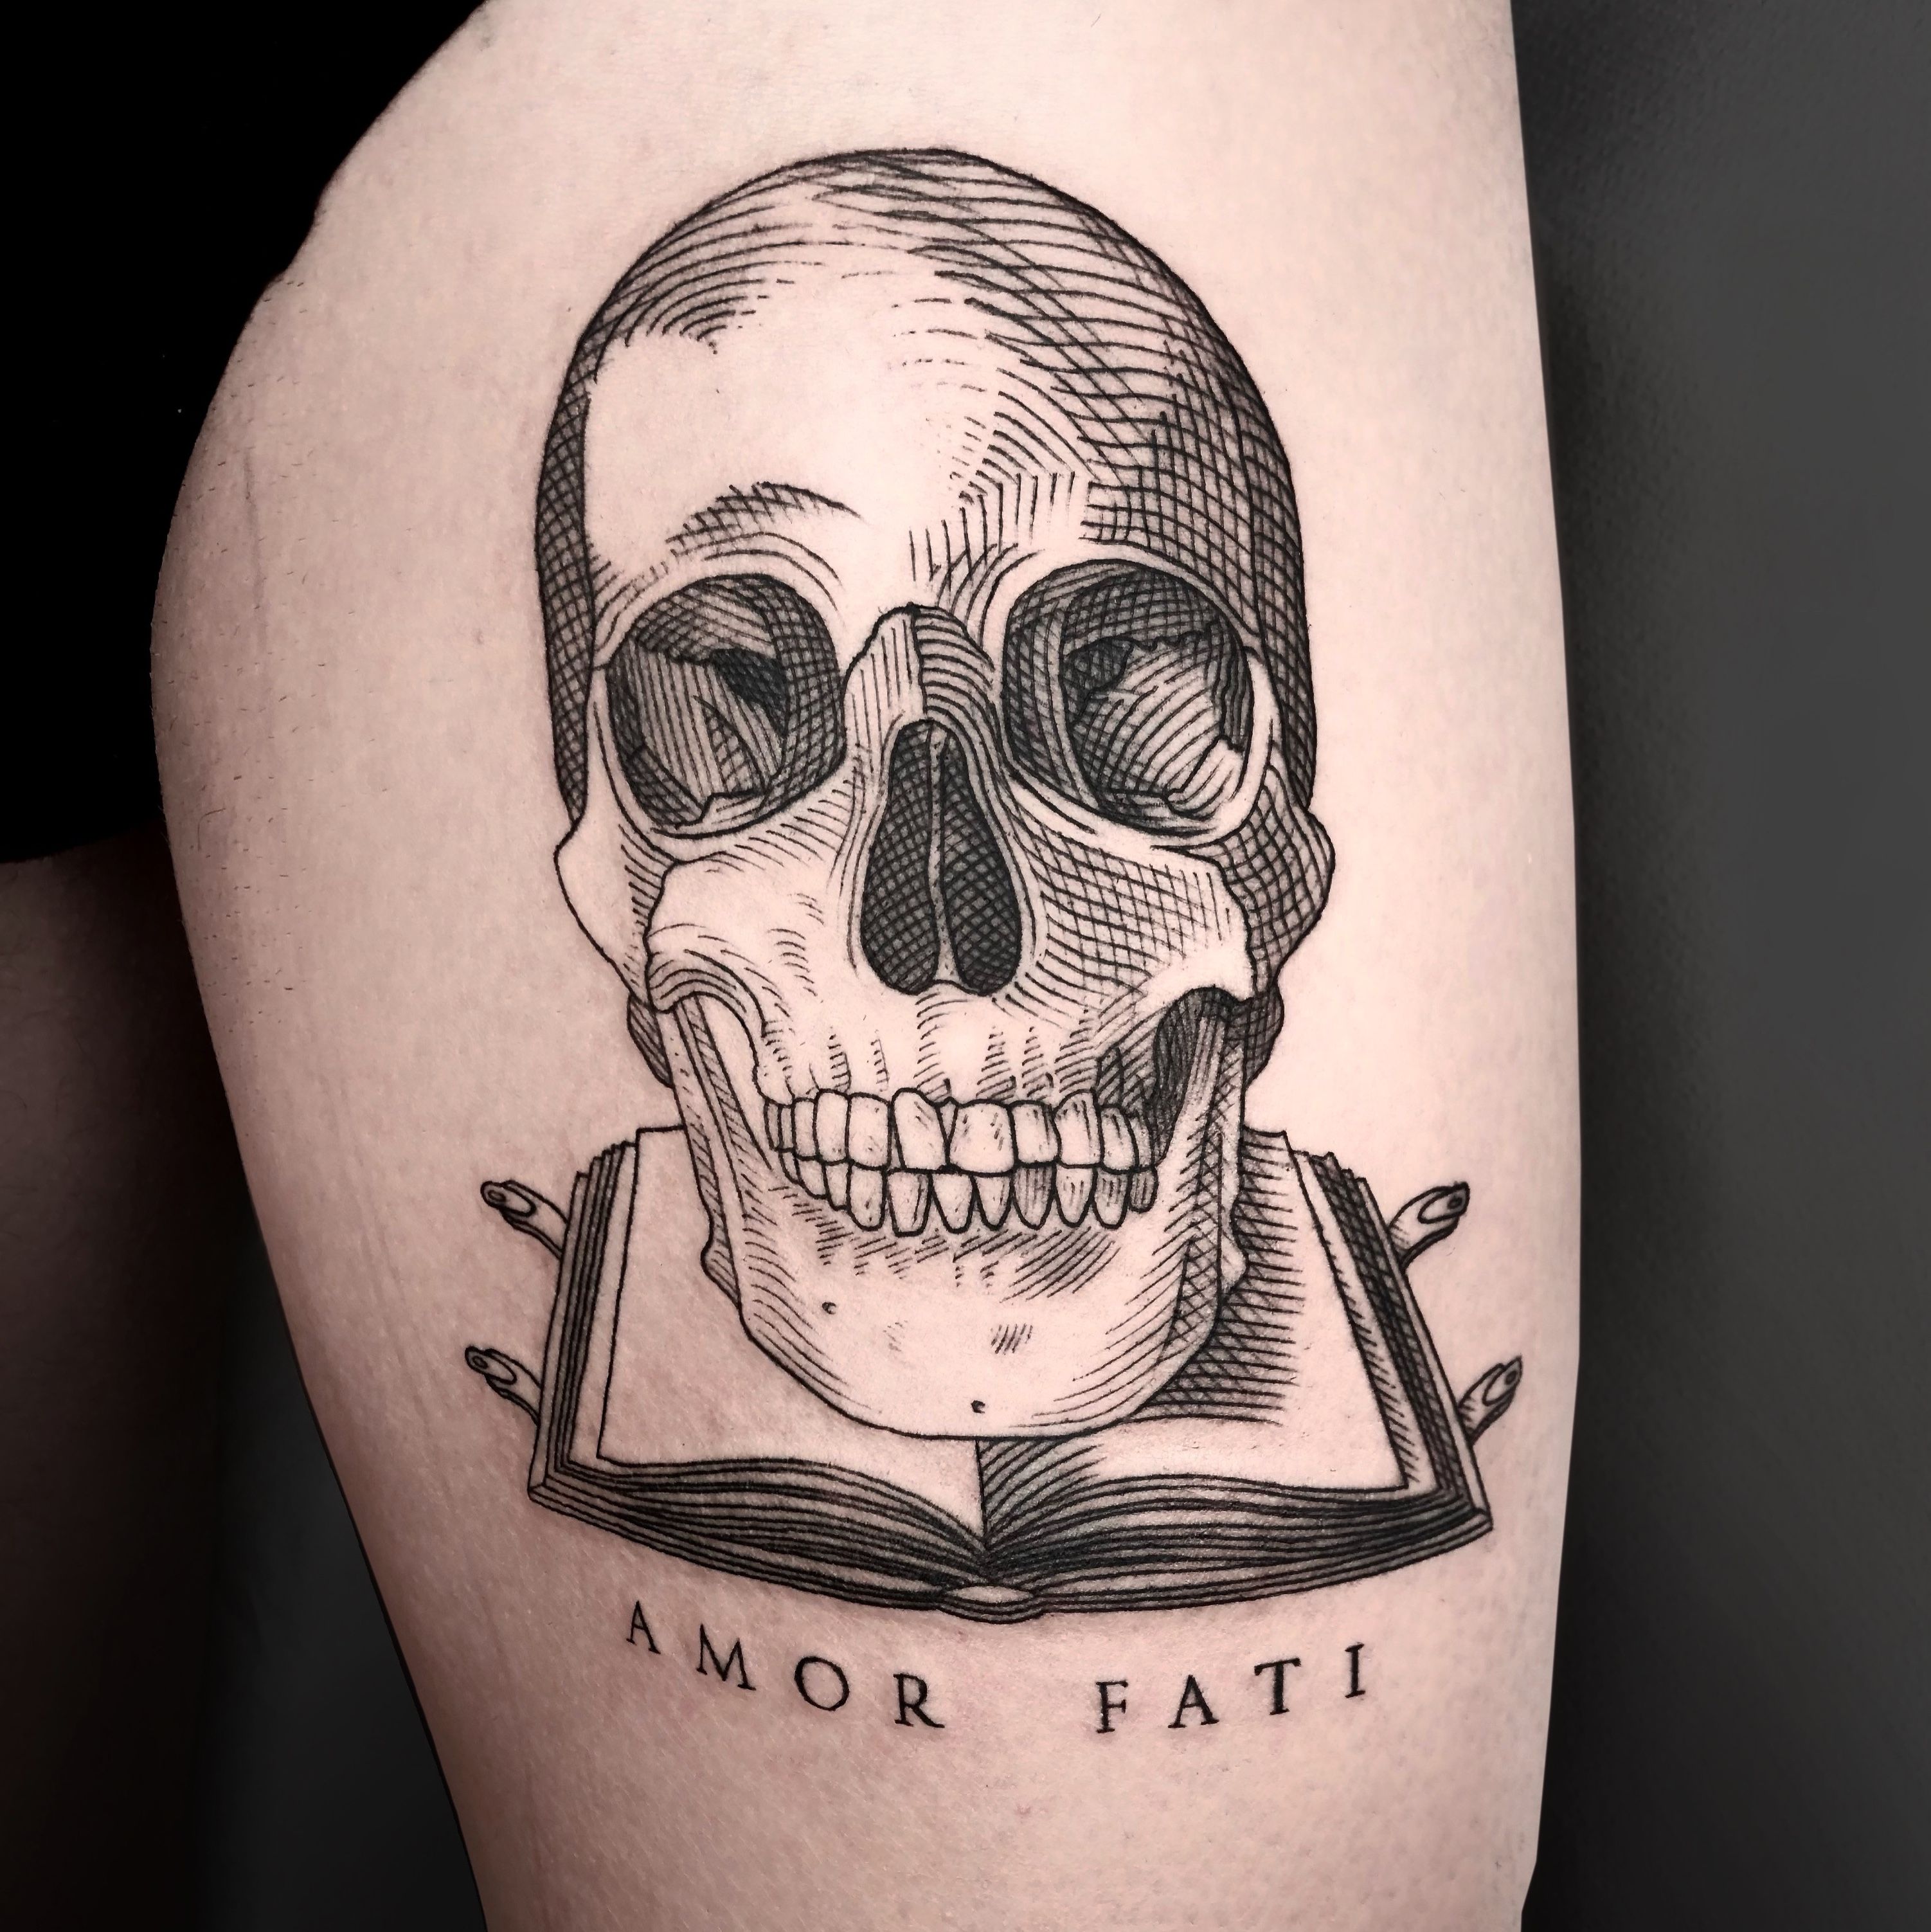 Amor Fati lettering tattoo on the inner forearm